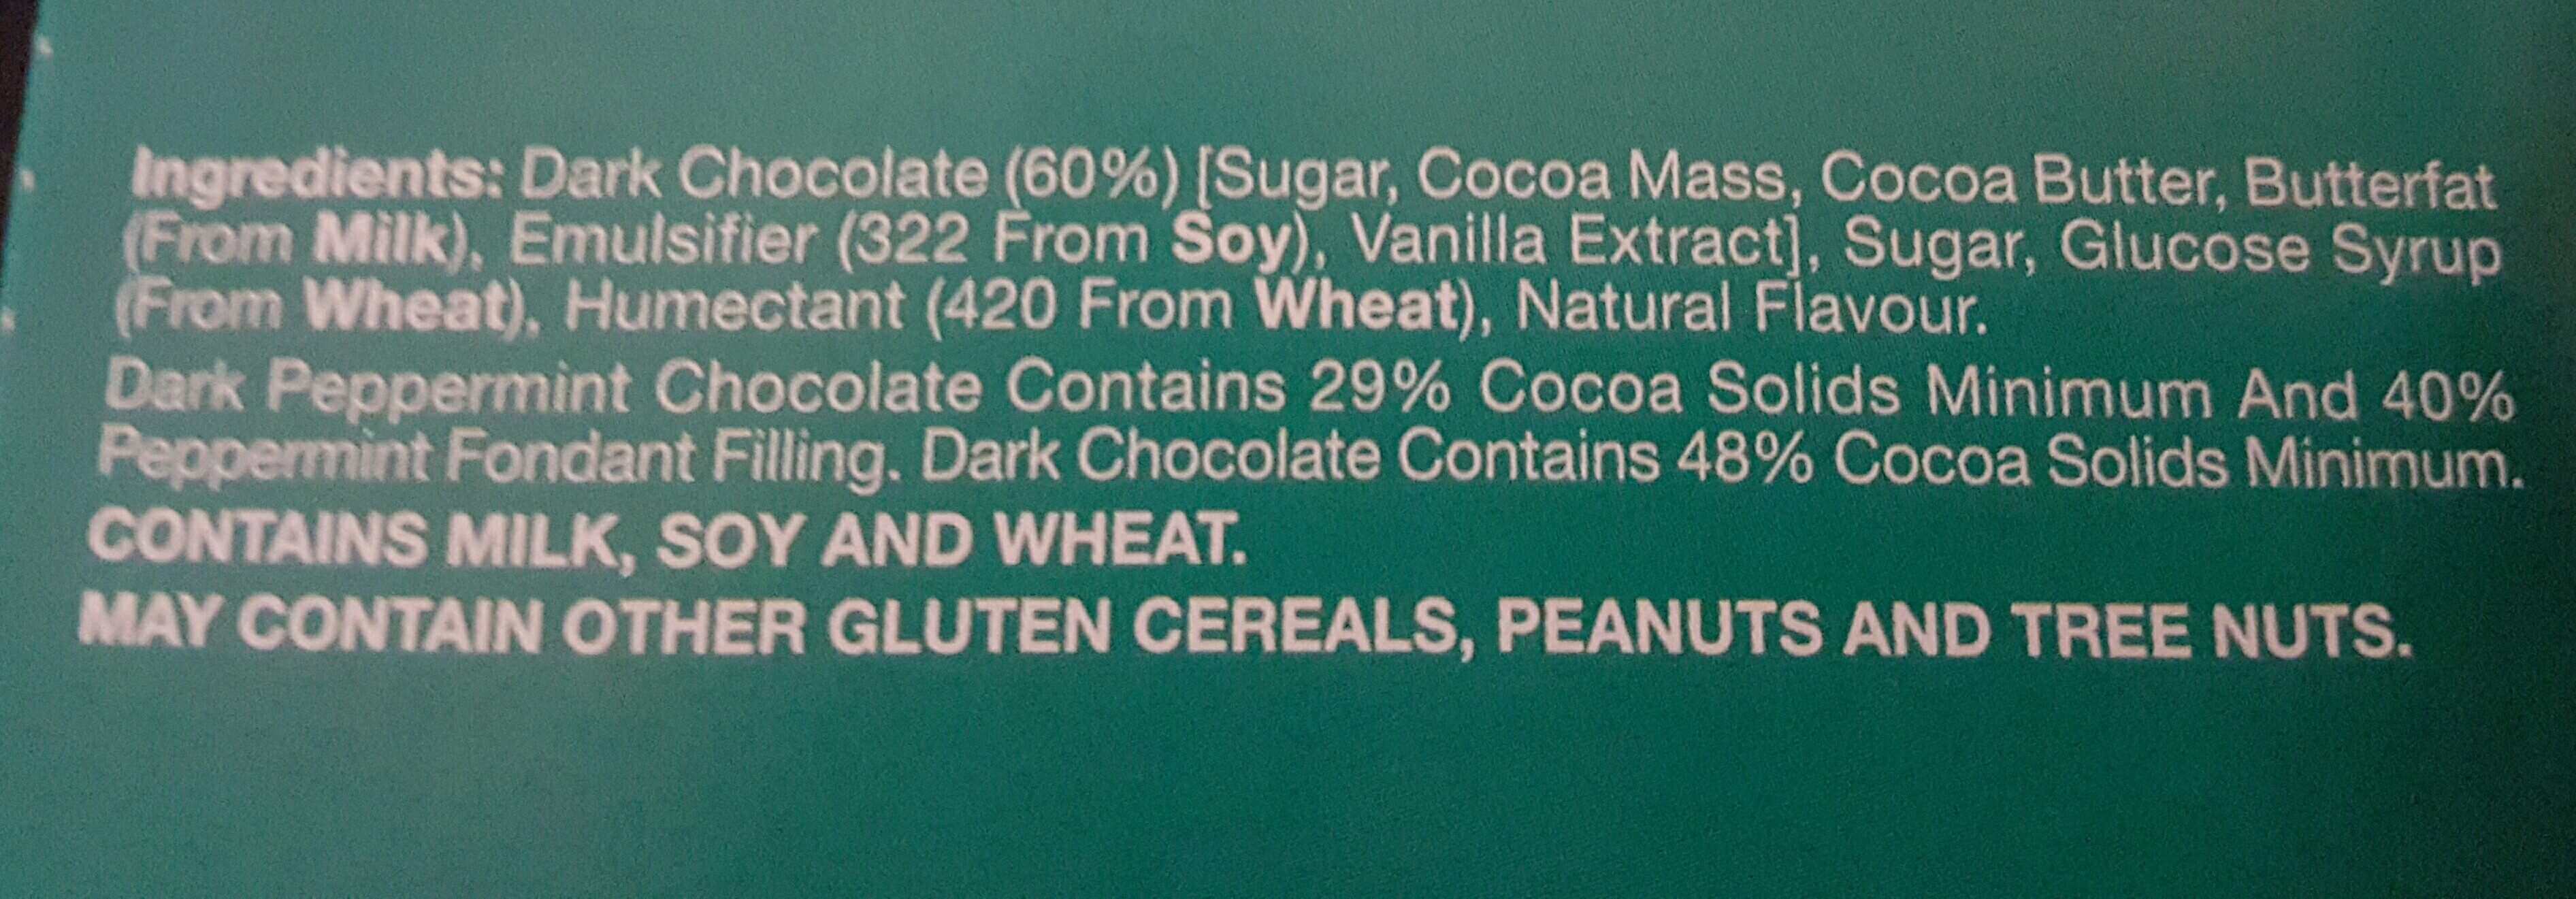 Dark Peppermint Chocolate - Ingredients